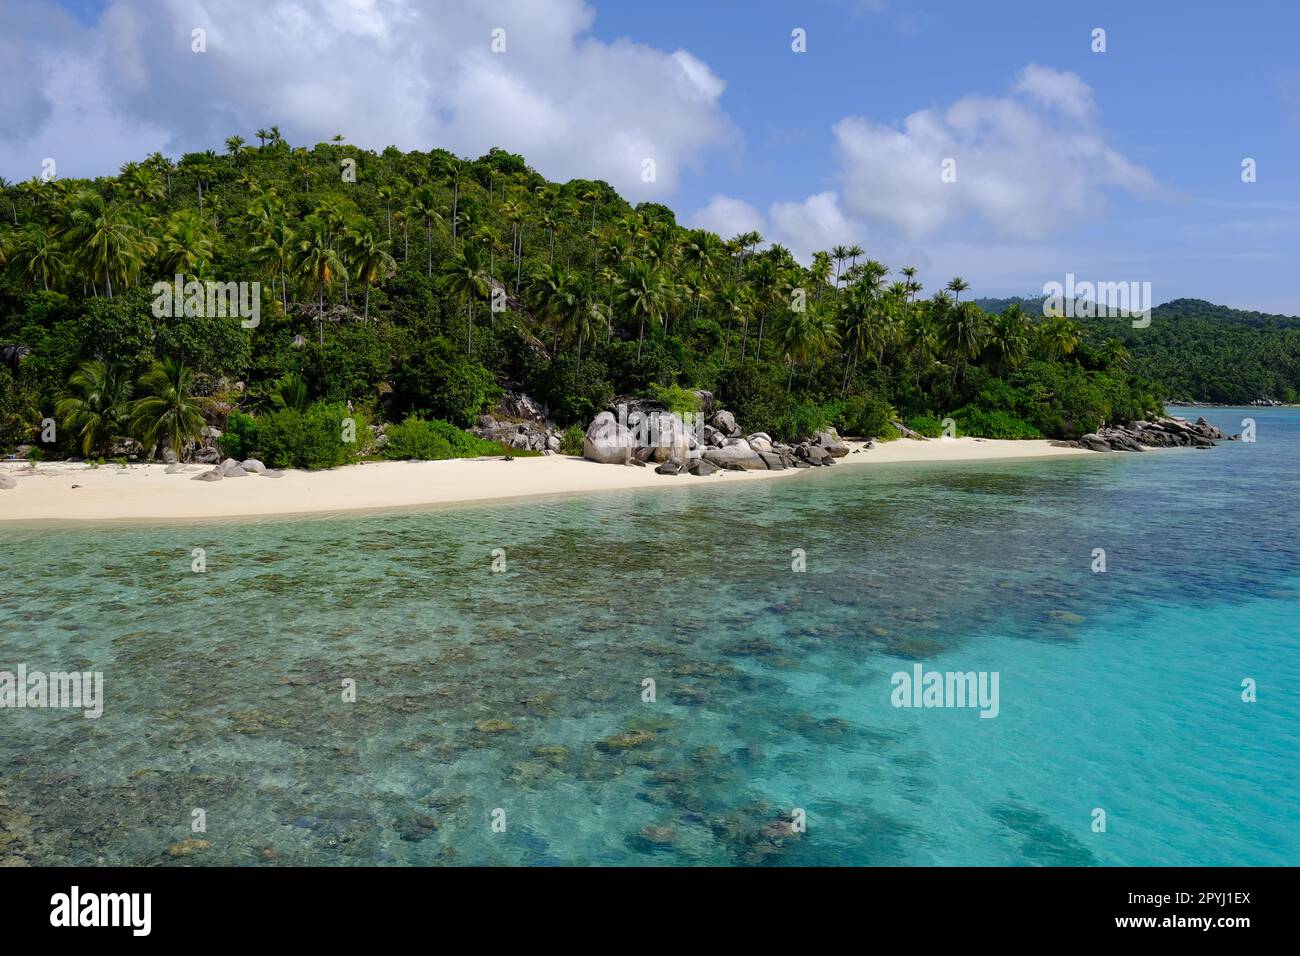 Indonesia Anambas Islands - Telaga Island coast with rocks and palm trees Stock Photo